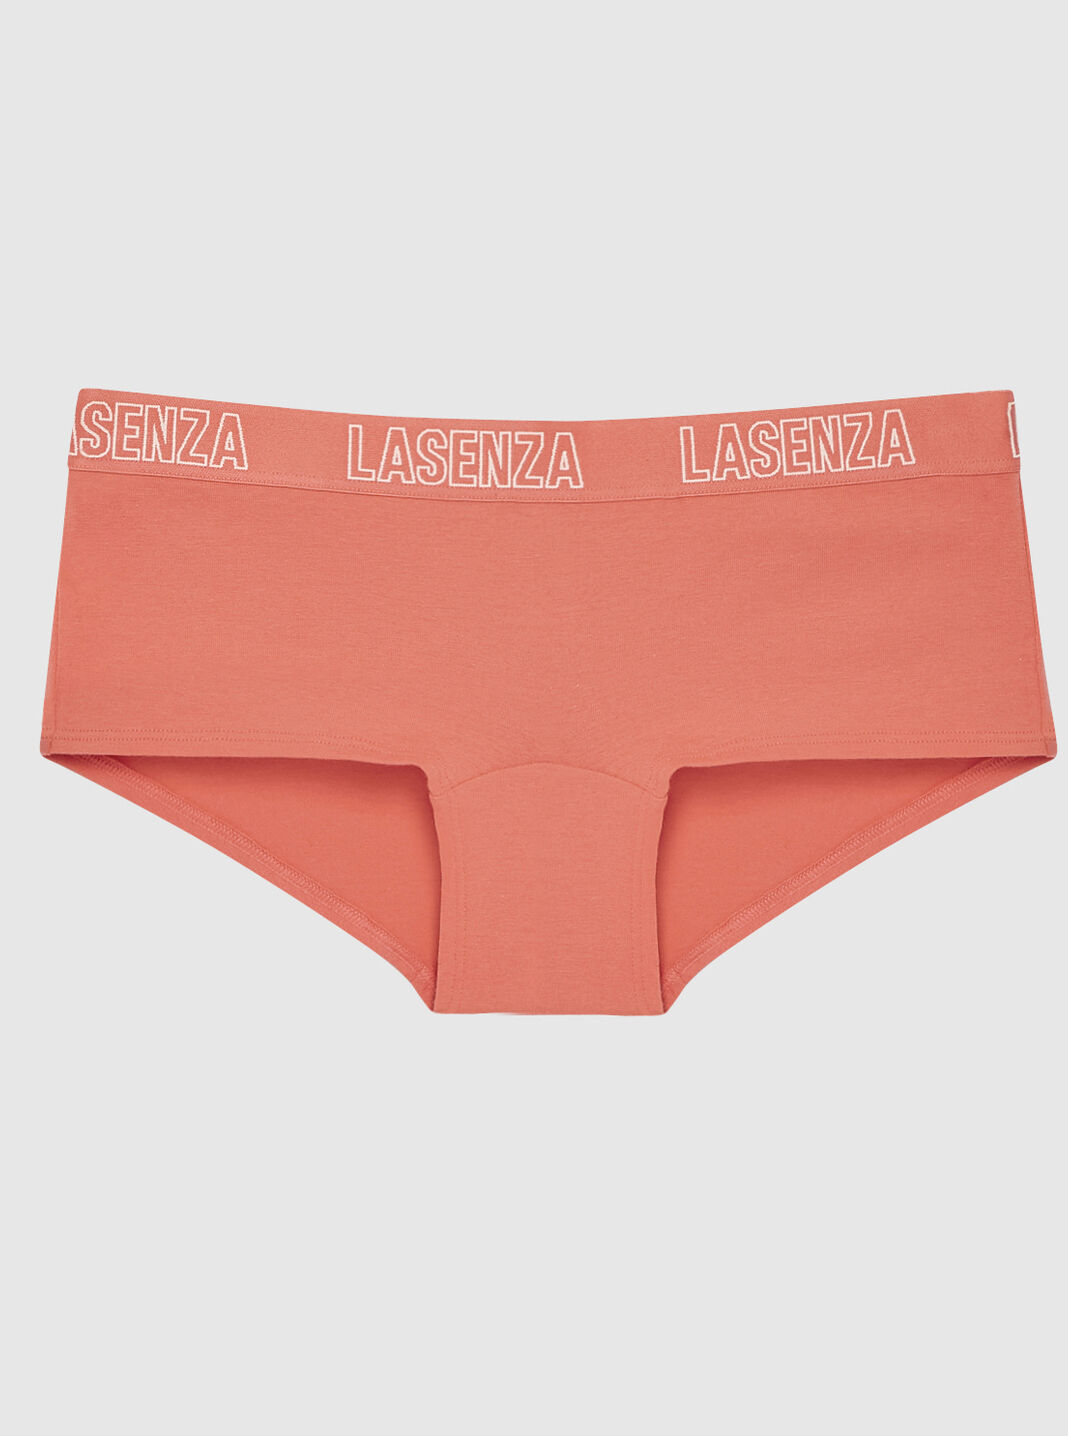 New Victoria Secret PINK Panties Boy shorts Large Peaches Cotton